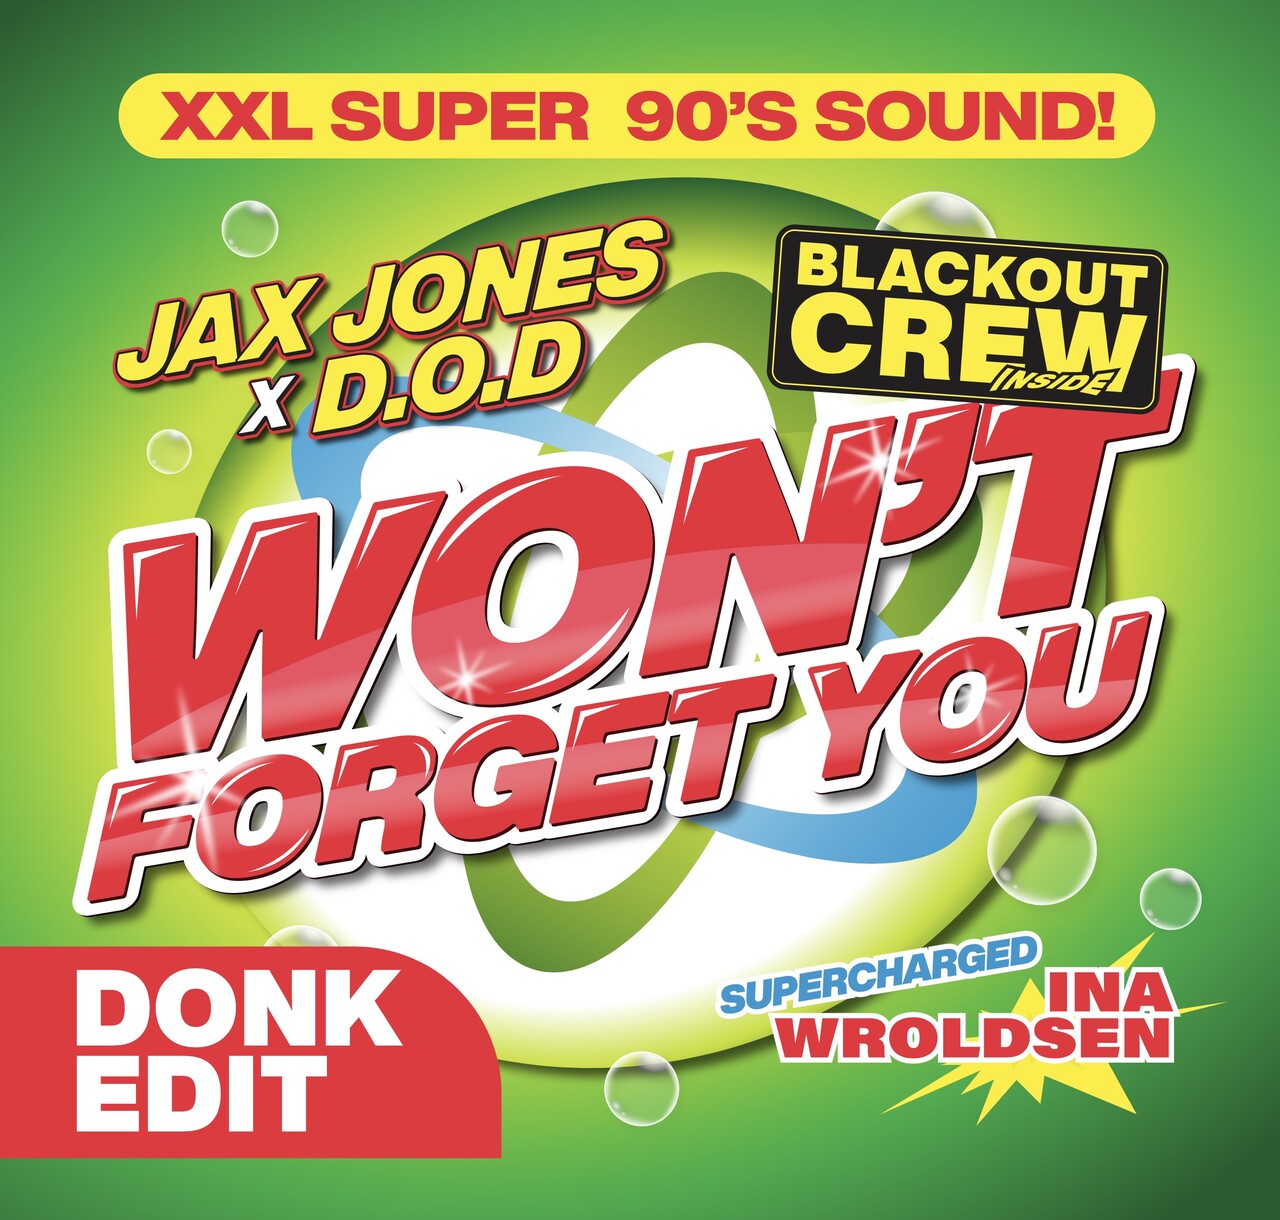 Jax Jones, D.O.D,  The Blackout Crew, Ina Wroldsen - Won't Forget You: CD Single